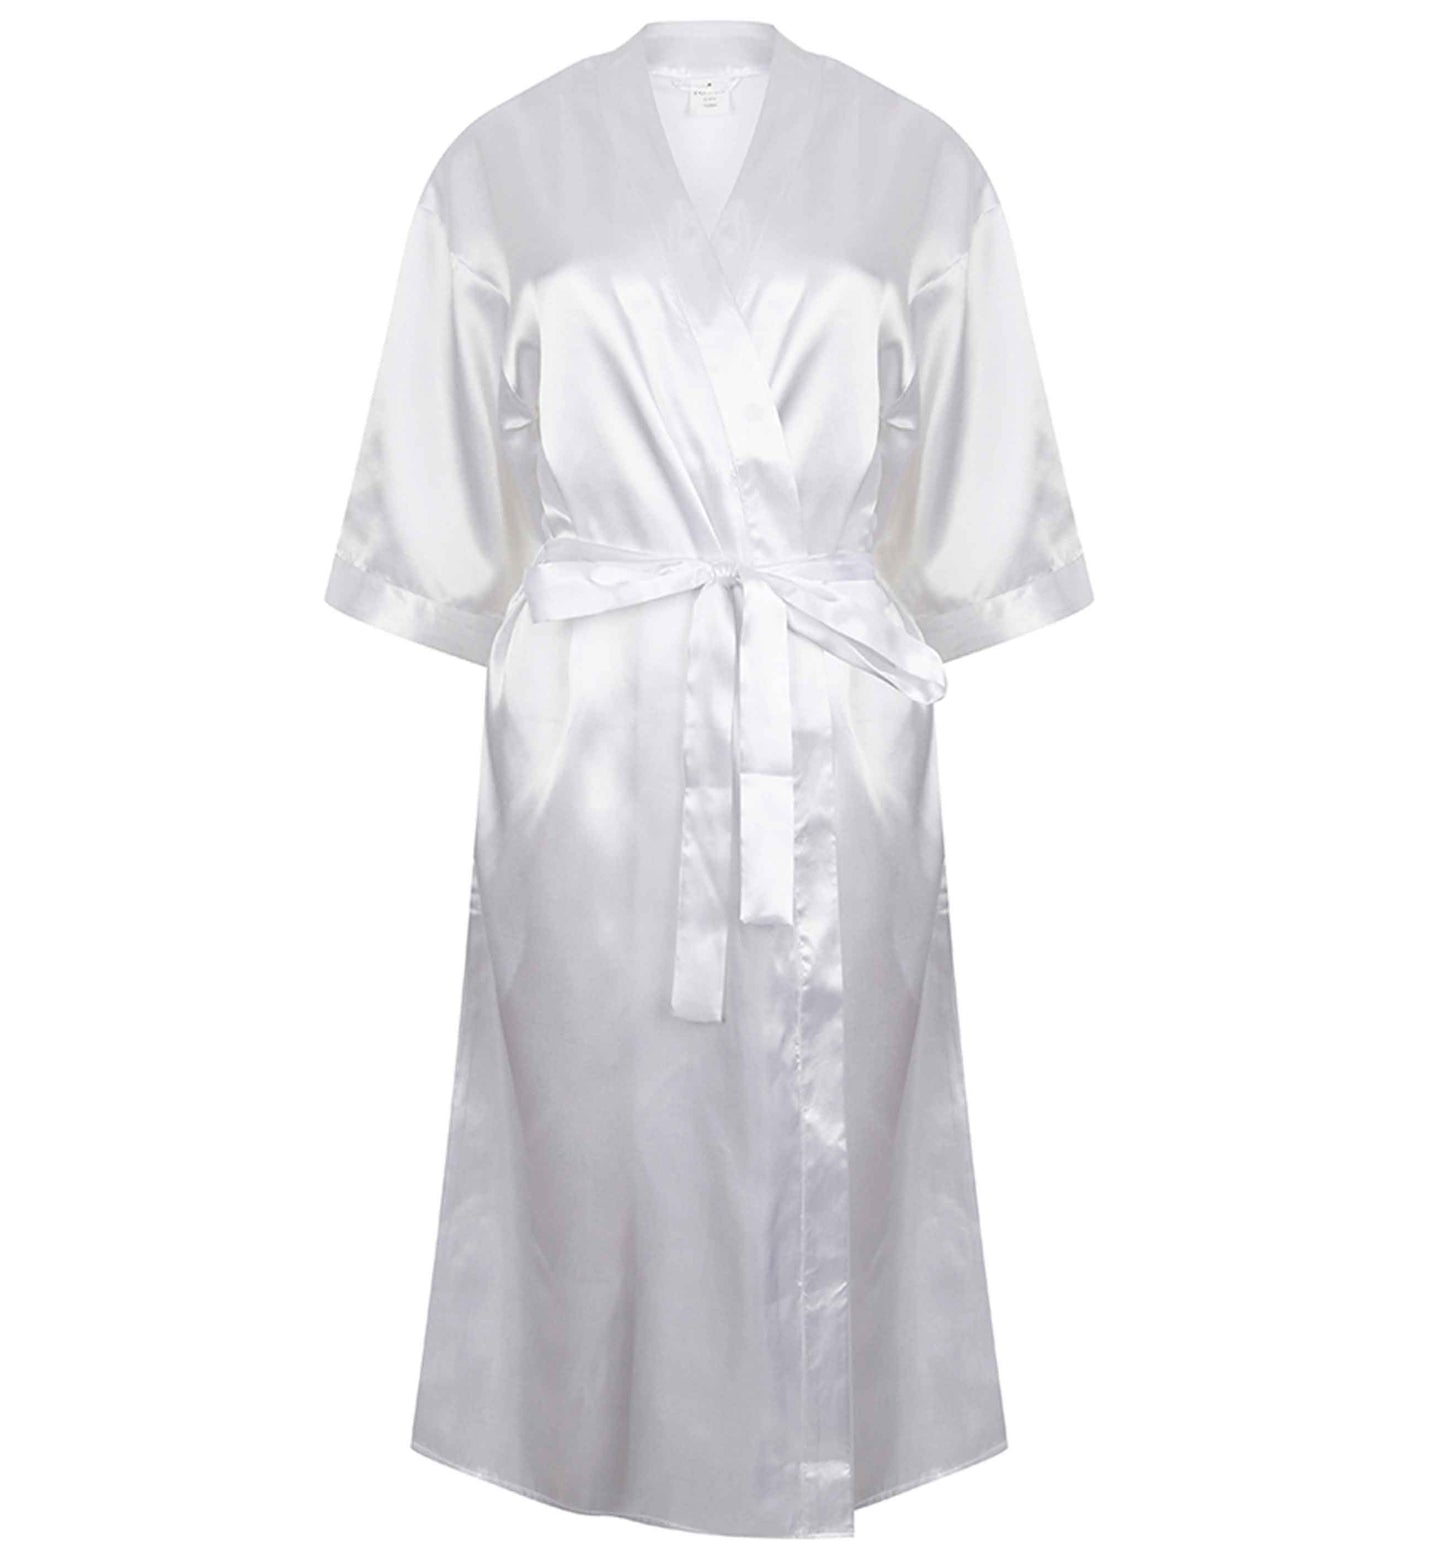 Buy me a shot I'm tying the knot | 8-18 | Kimono style satin robe | Ladies dressing gown